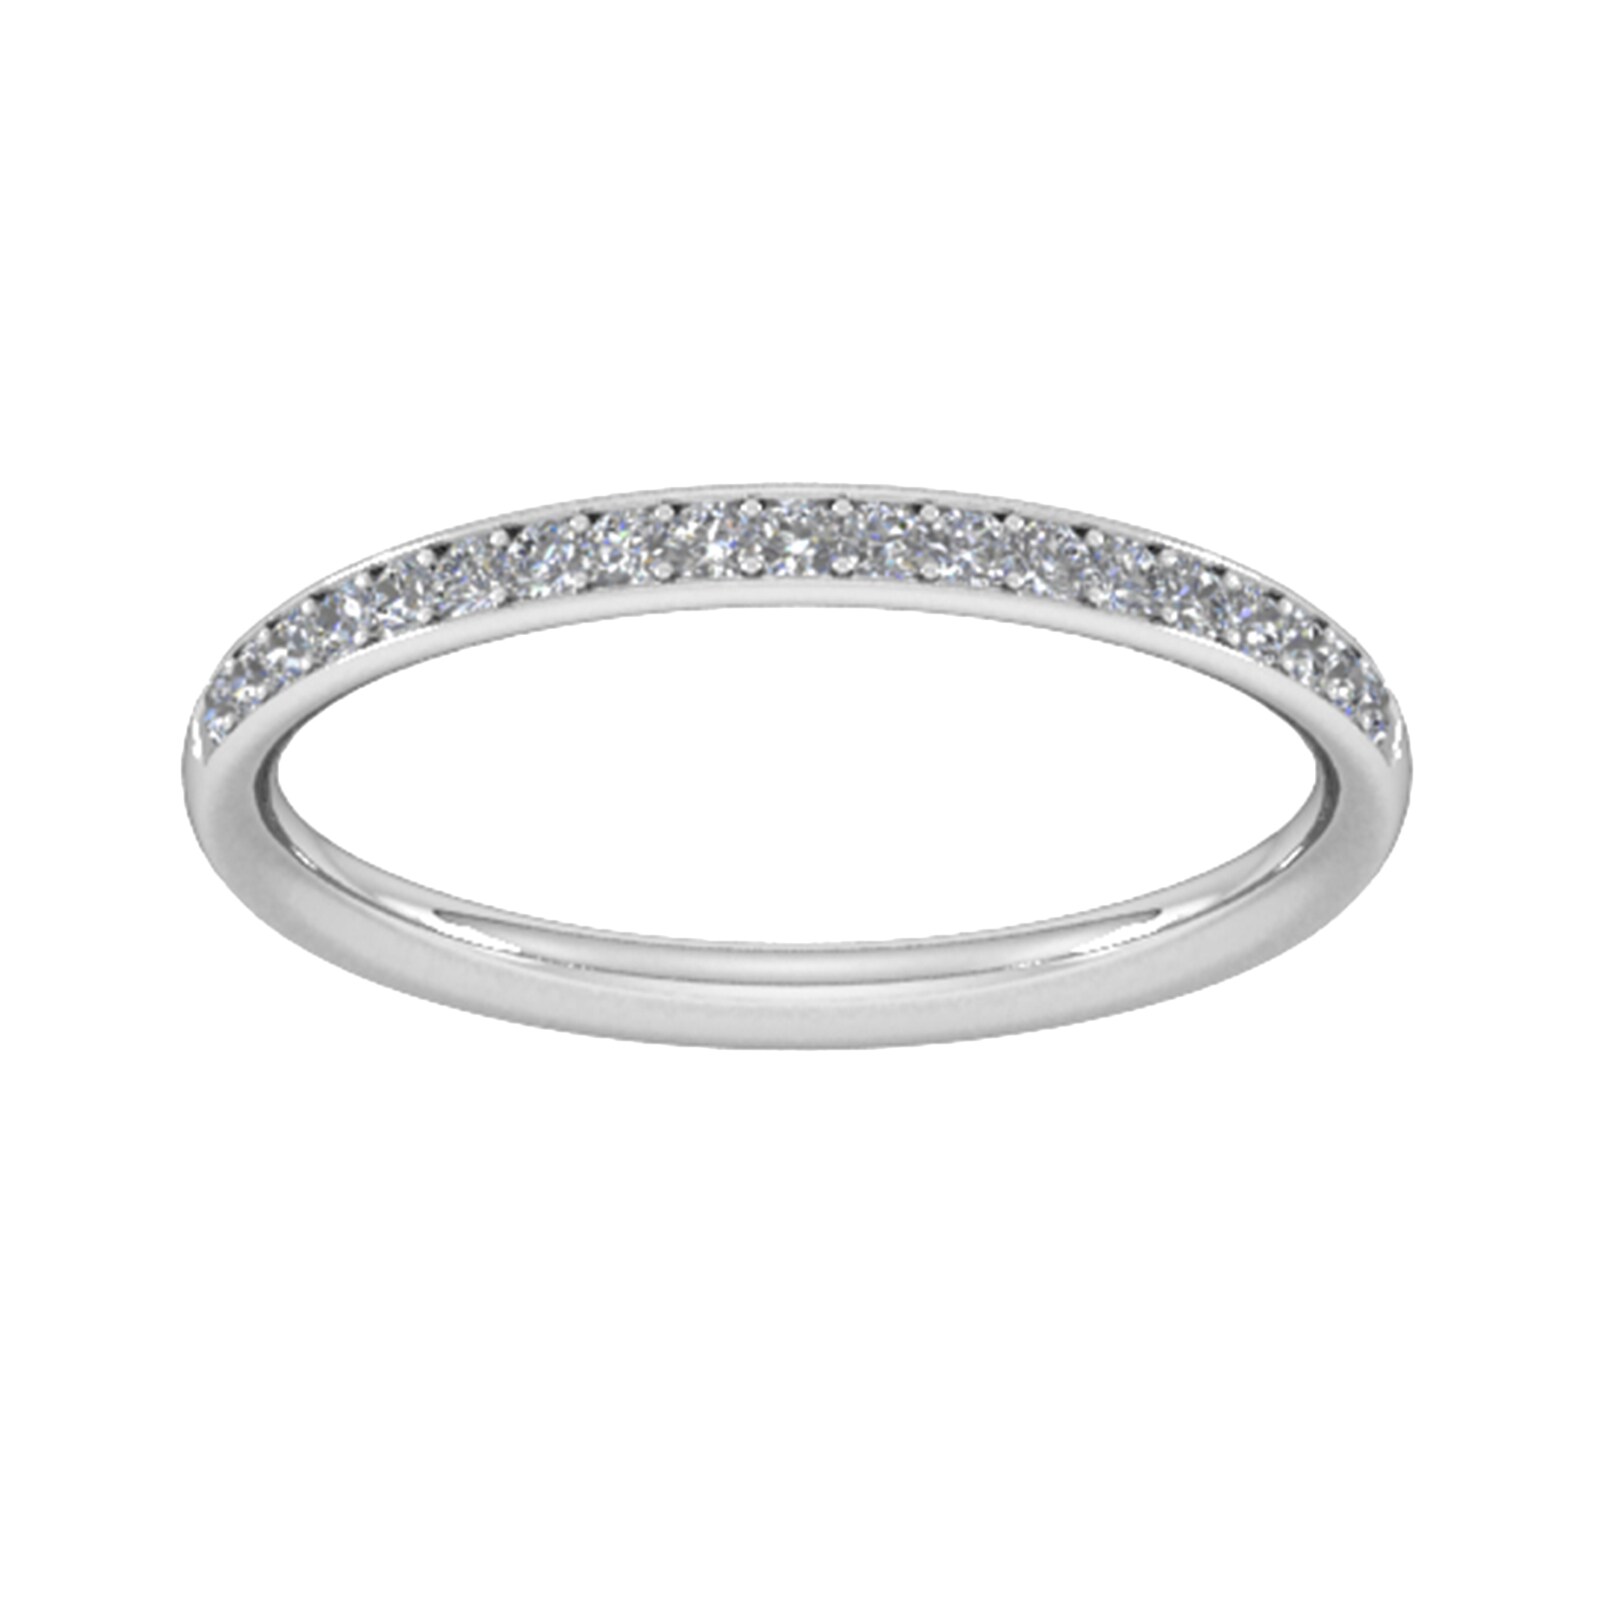 0.18 Carat Total Weight Brilliant Cut Grain Set Diamond Wedding Ring In 9 Carat White Gold - Ring Size Z